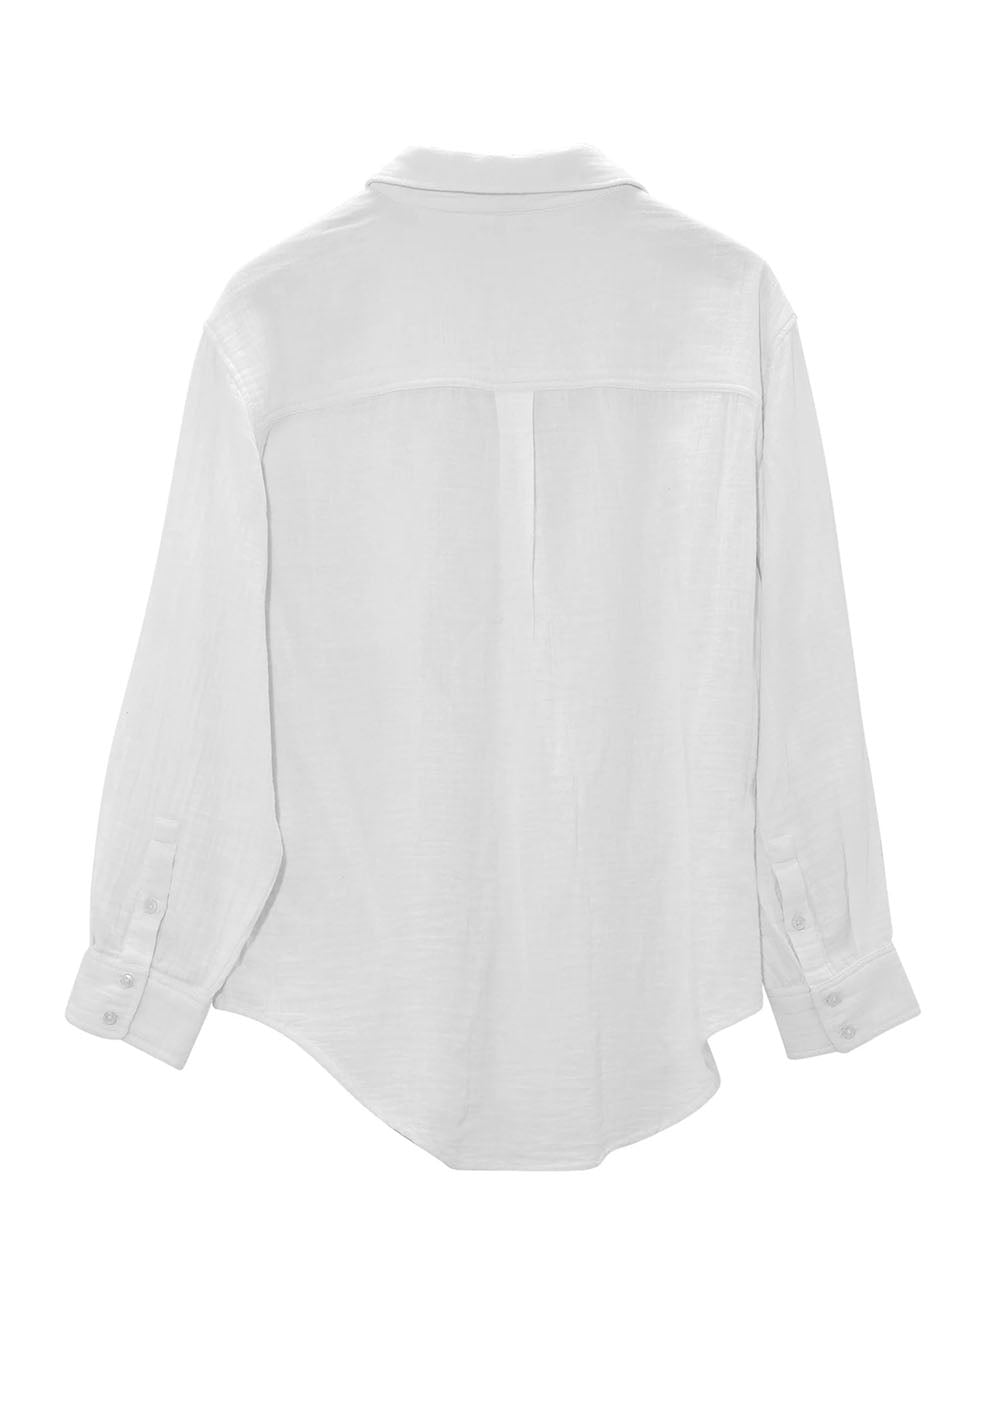 Supersoft Gauze Boyfriend Shirt - White - Echo New York - Danali - EB0400-100